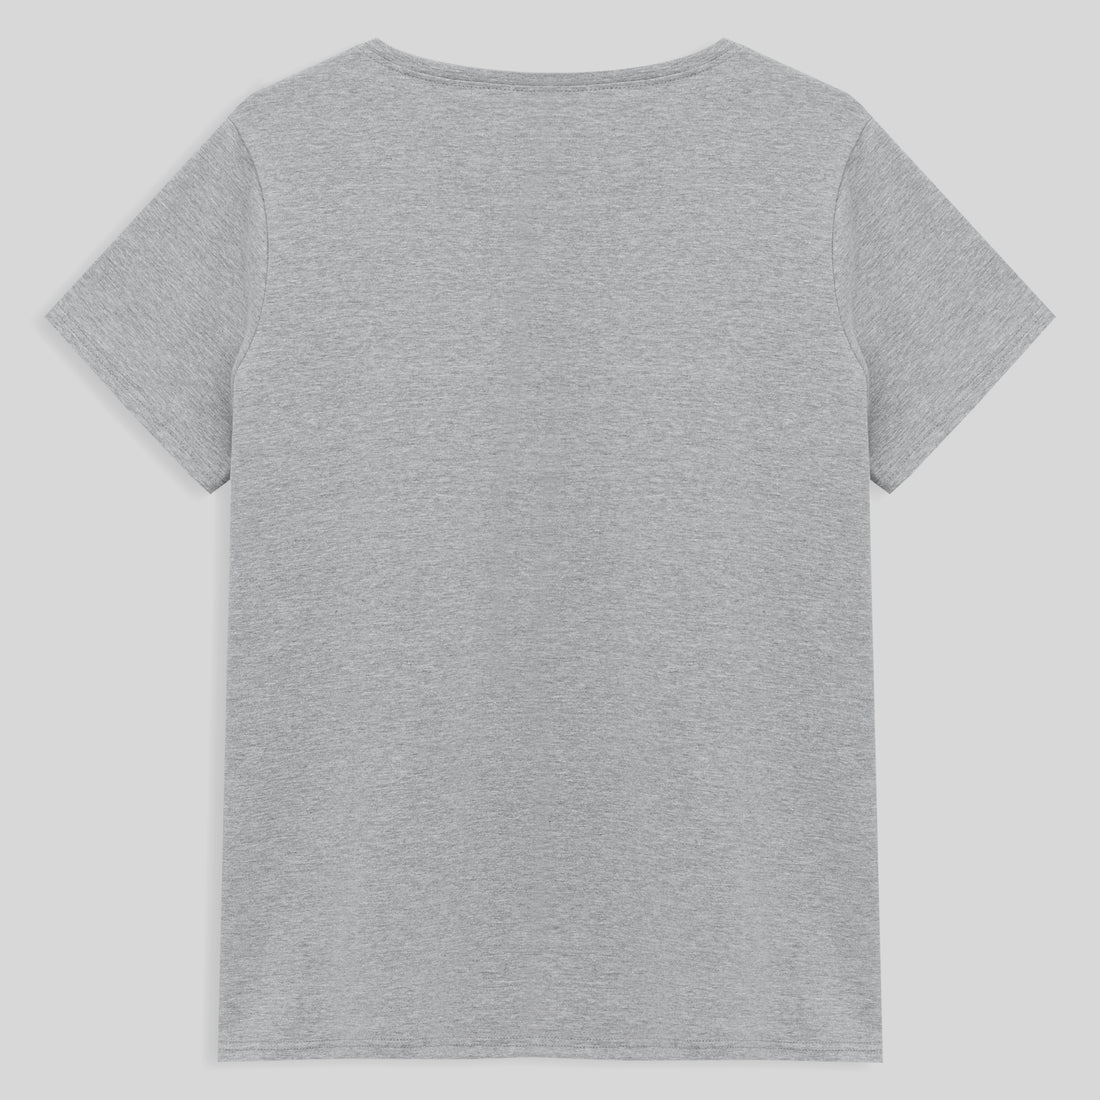 Camiseta Slim Gola V Cotton Plus Size Feminina - Mescla Claro